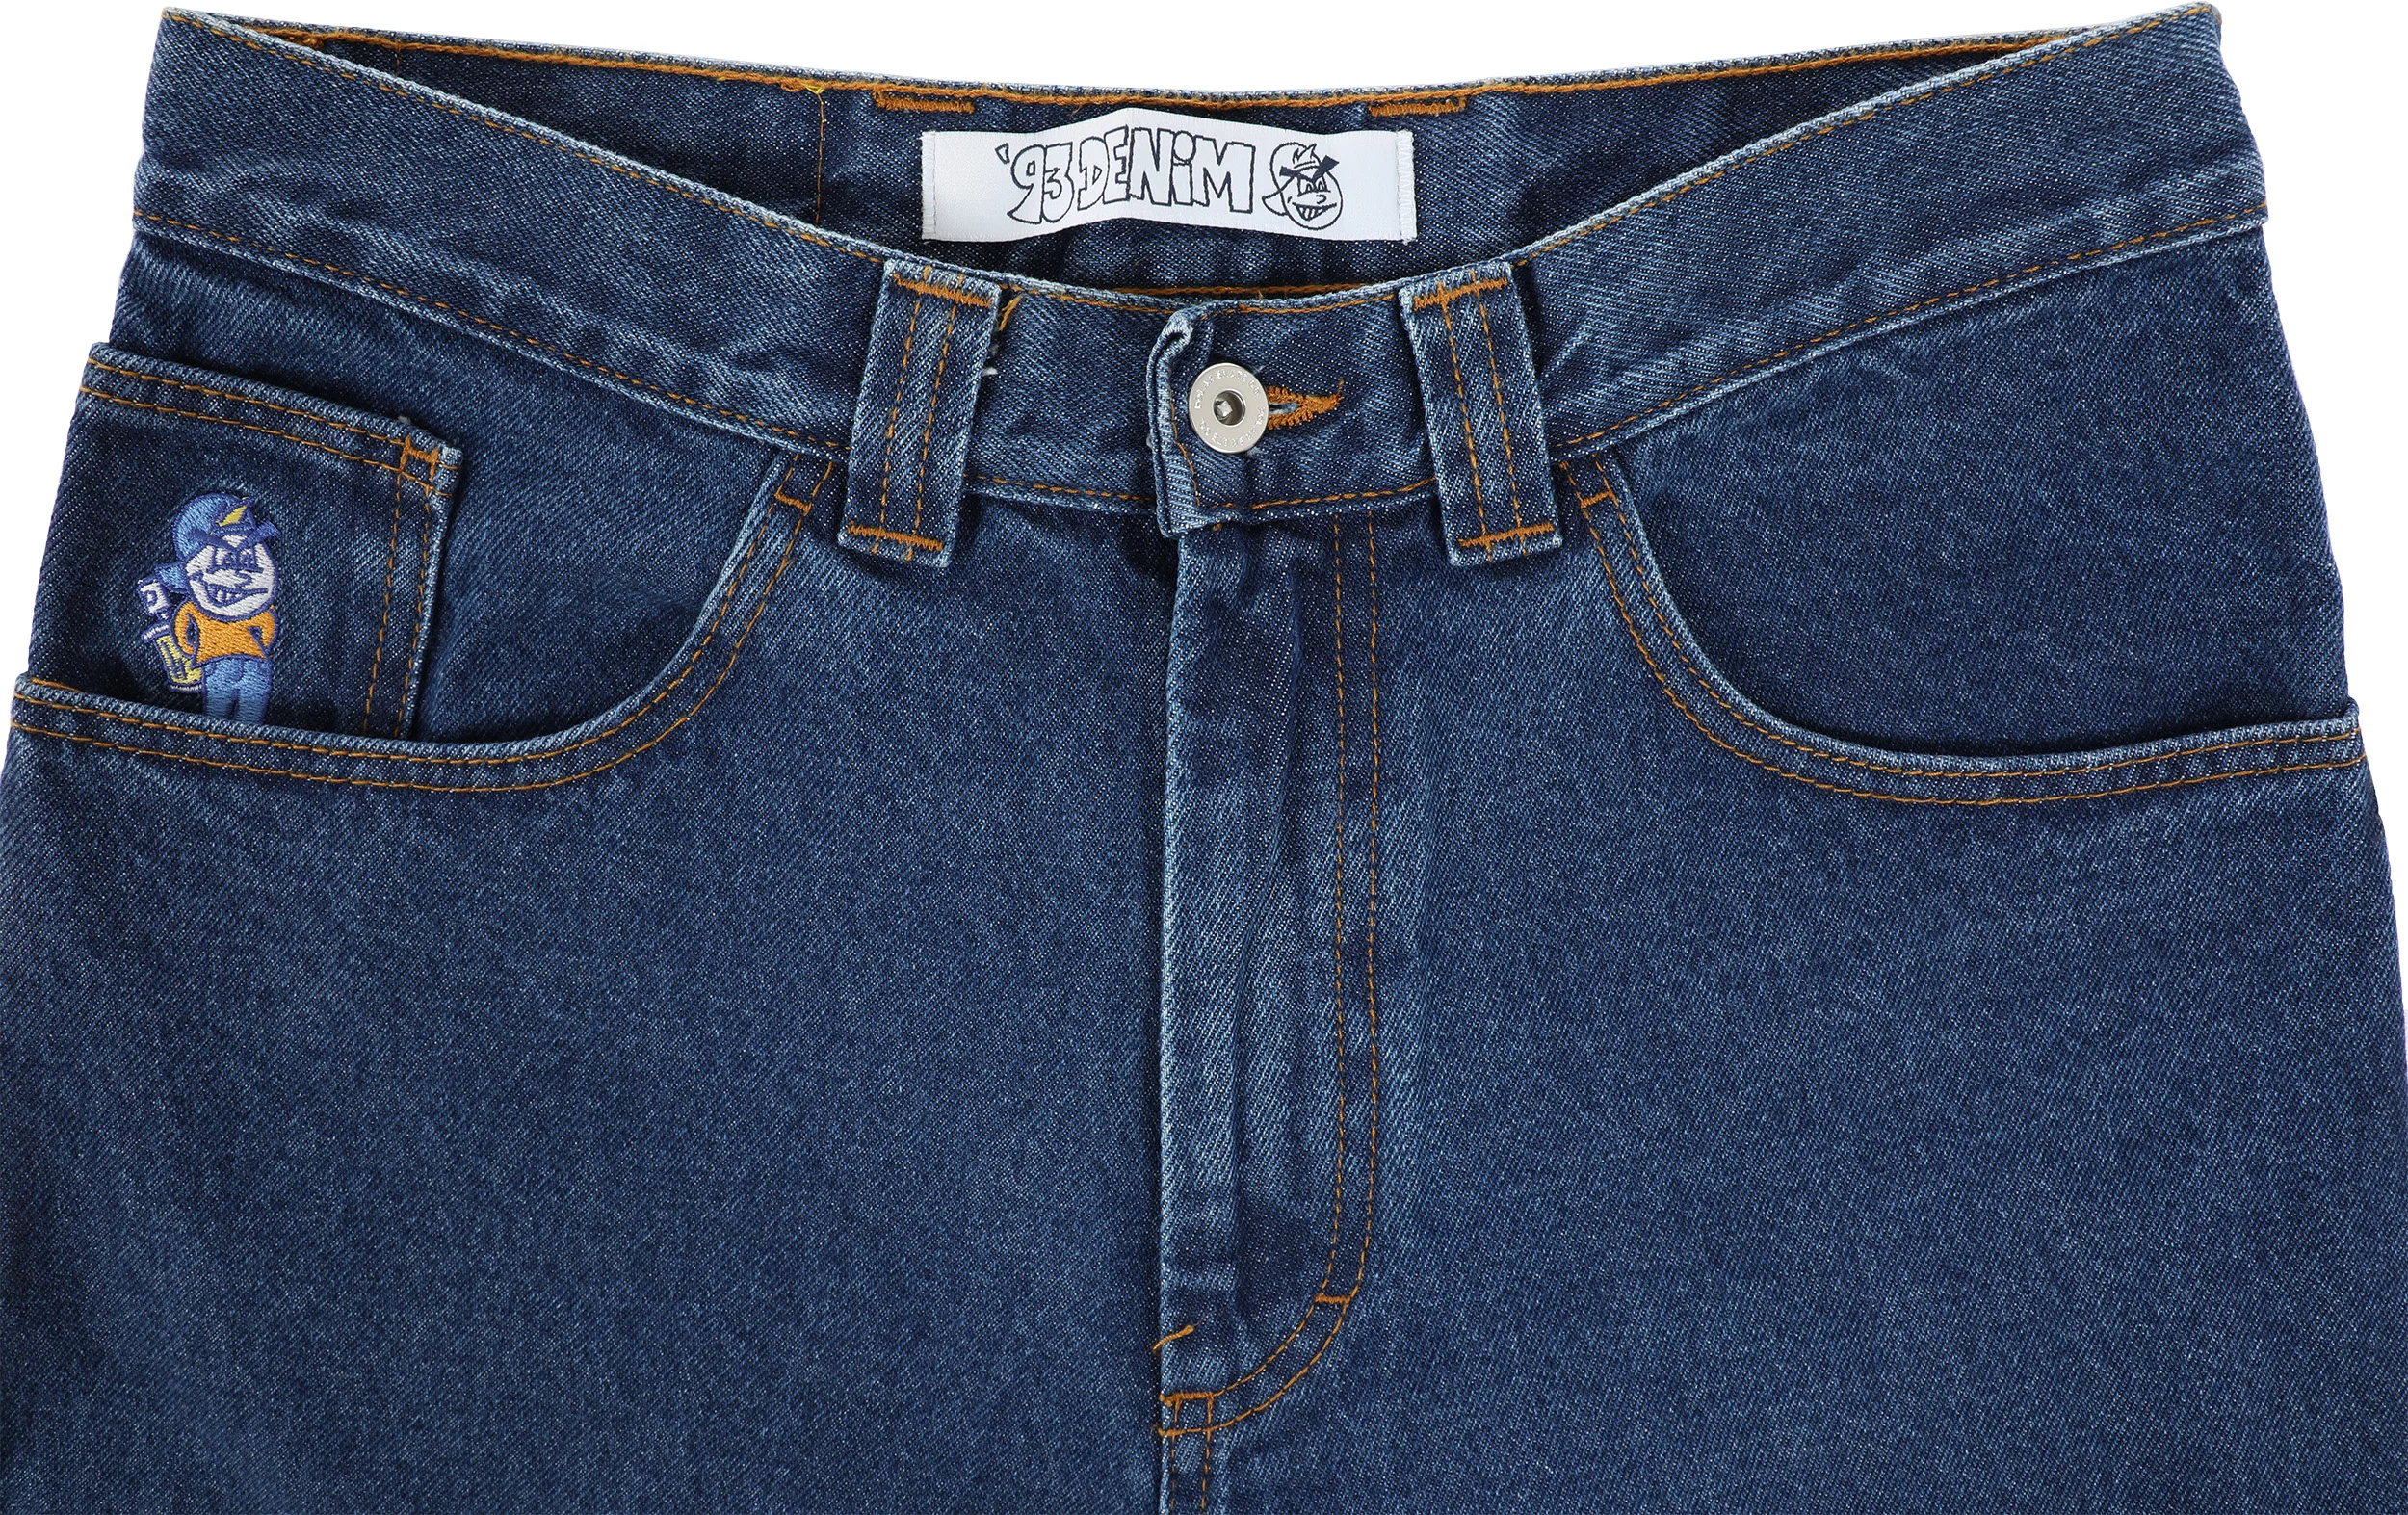 Polar Skate Co. '93! Denim Jeans - dark blue - Free Shipping | Tactics